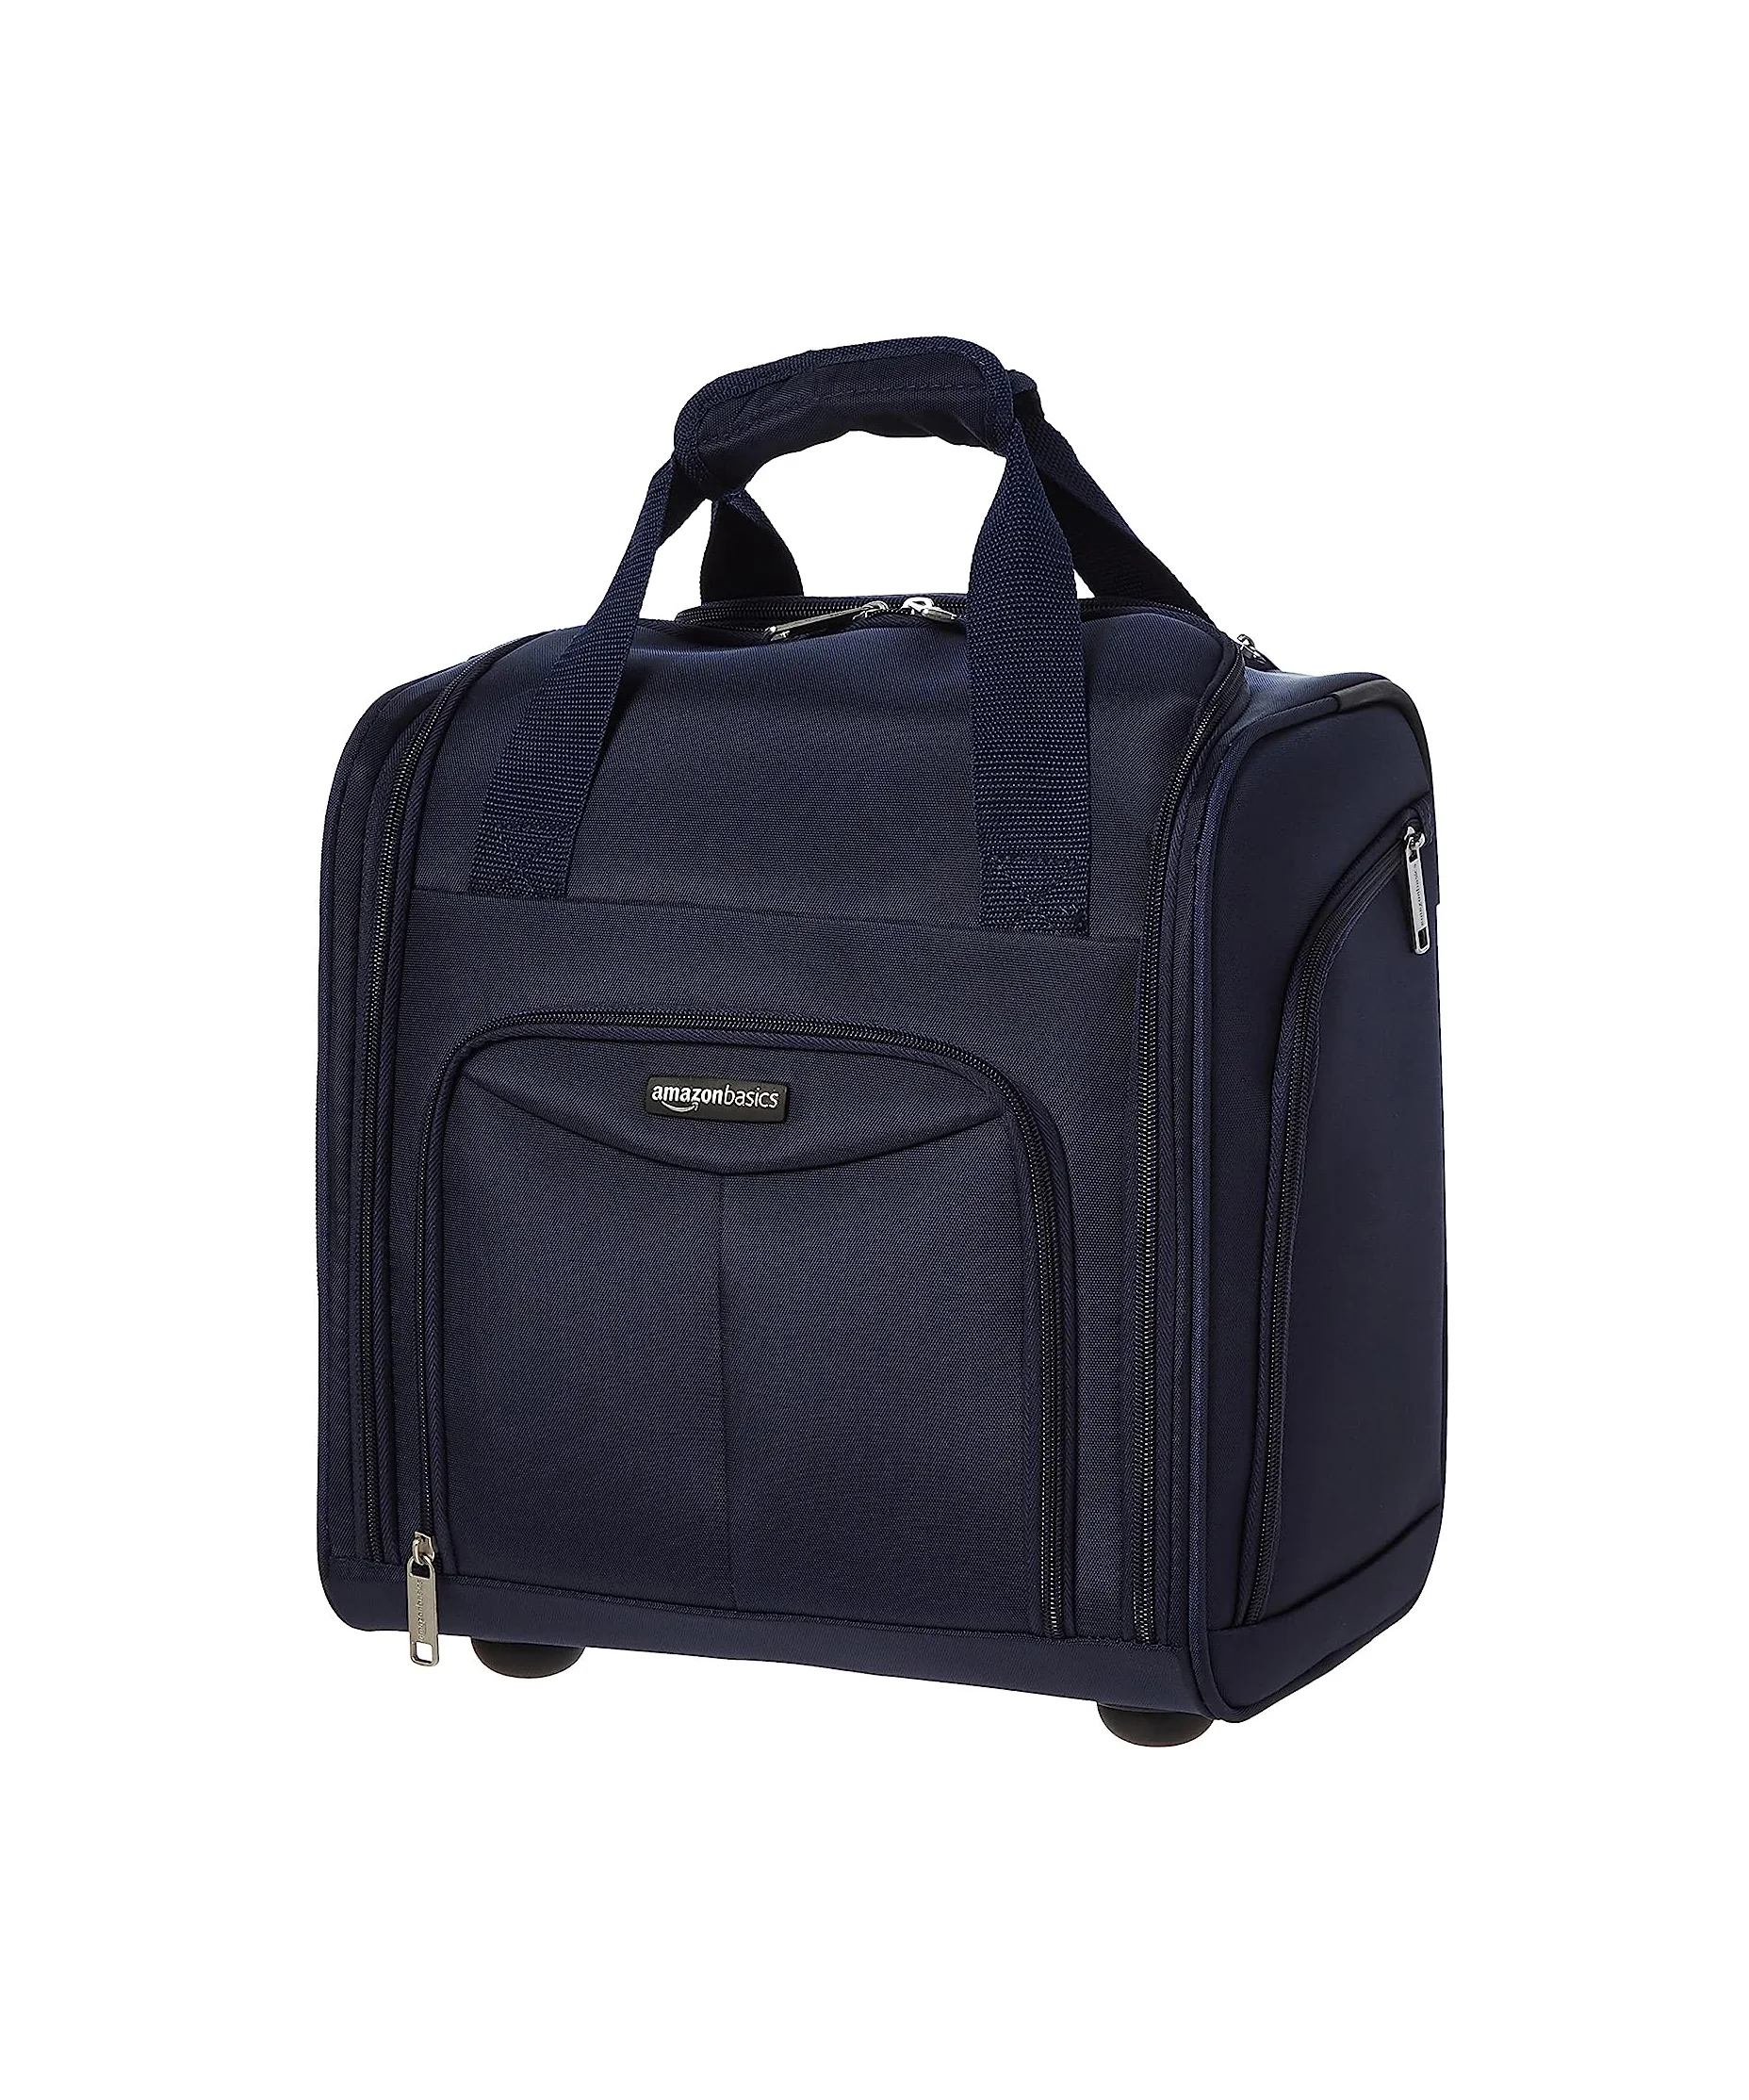 Basics Carry-On Travel Backpack - Black